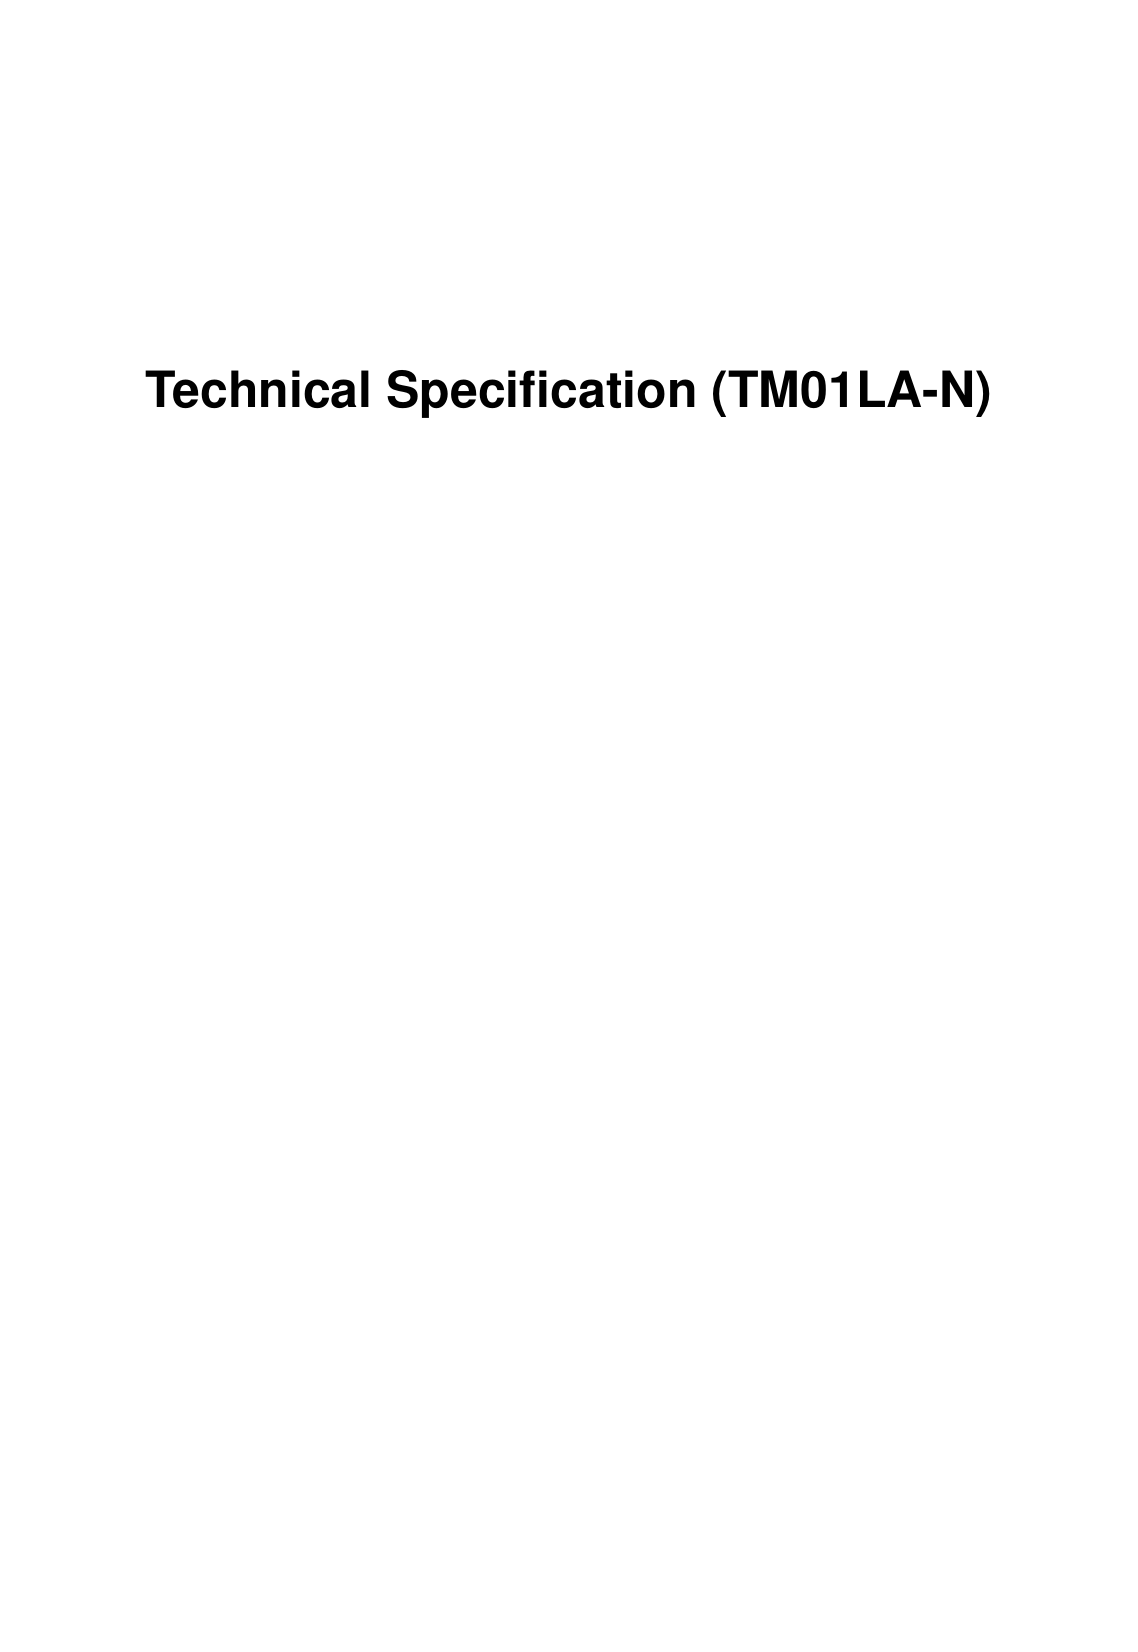    Technical Specification (TM01LA-N)                           